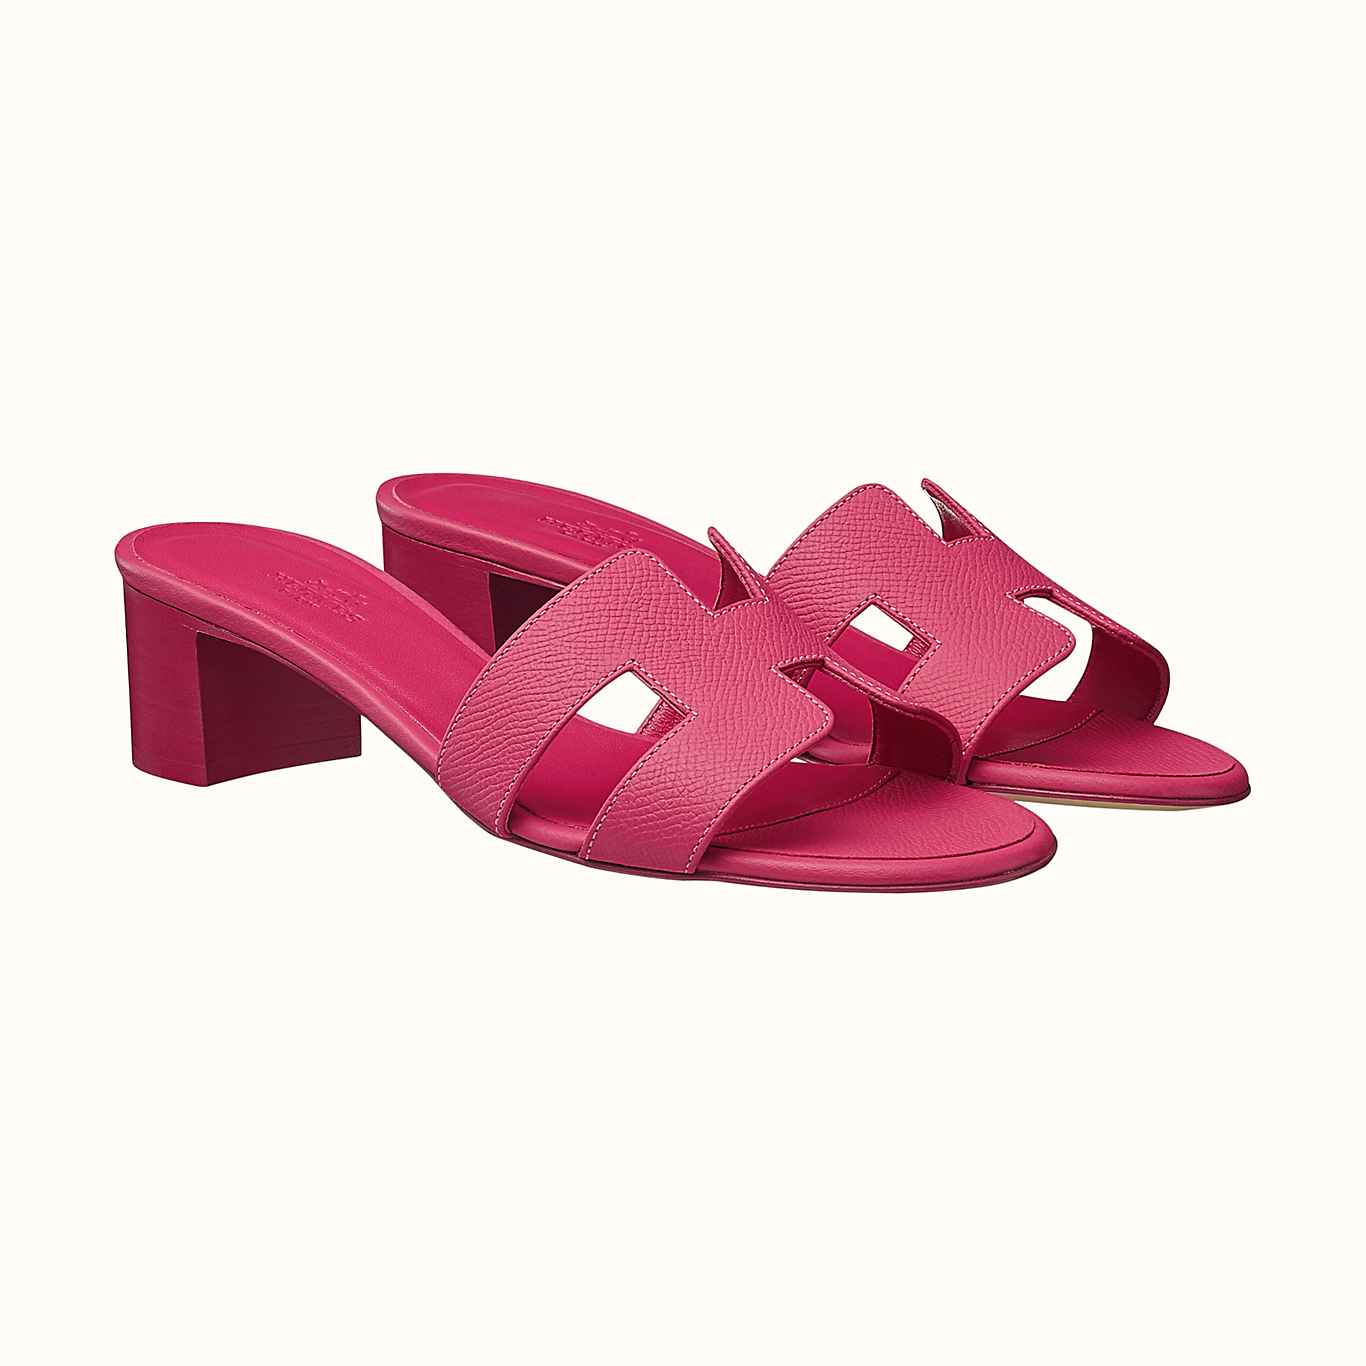 hermes slippers pink